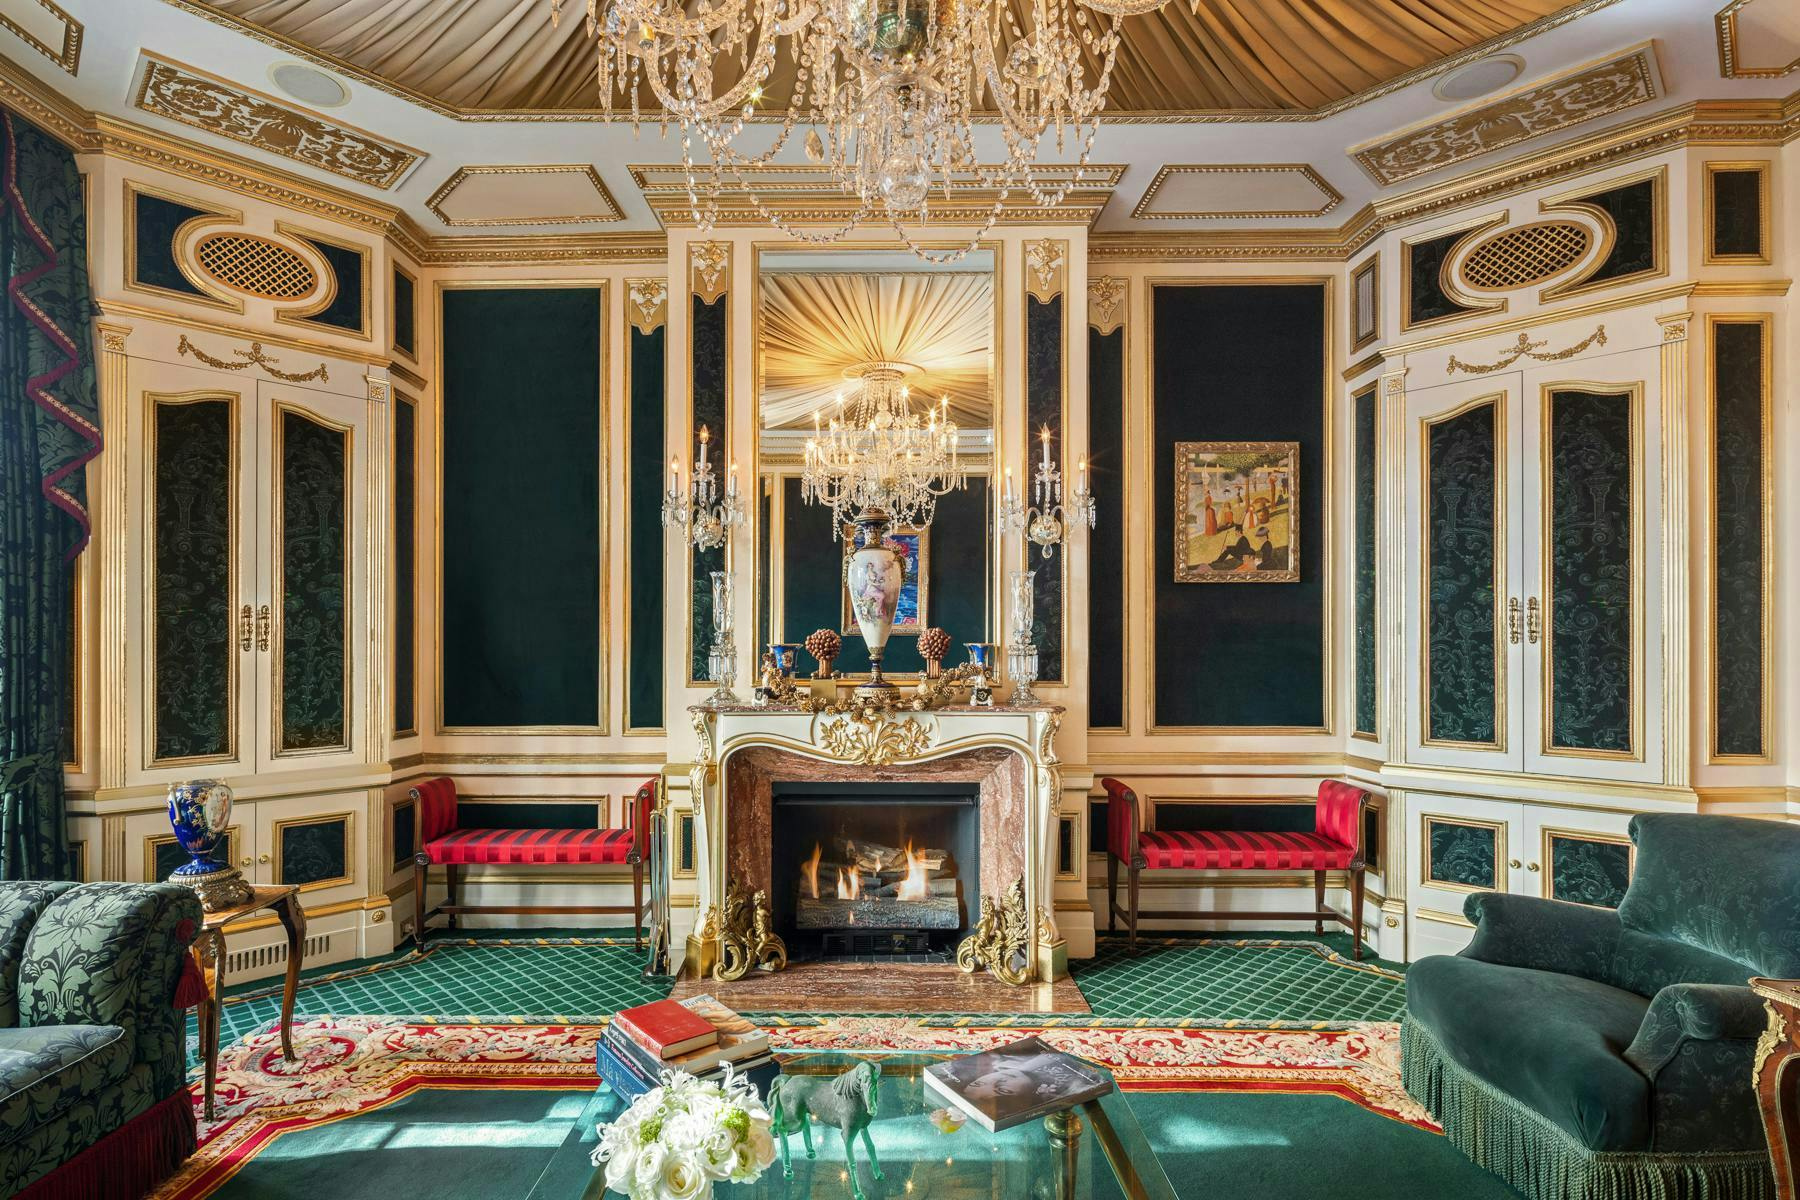 luxurious 26 million € worth at Ivana Trump's house in New York